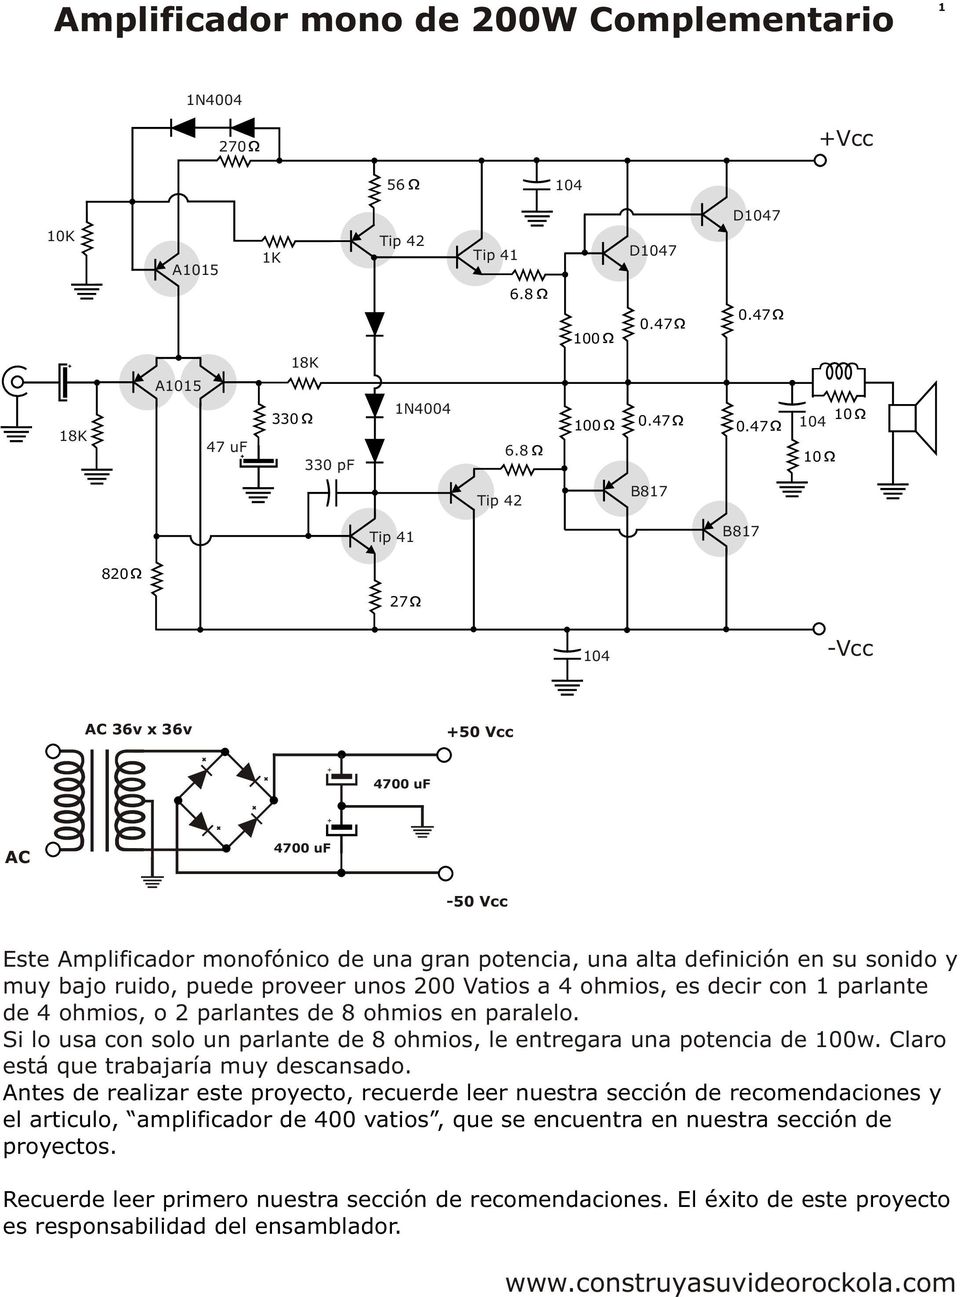 Faringe Consecutivo ignorancia Amplificador mono de 200W Complementario 1 - PDF Descargar libre